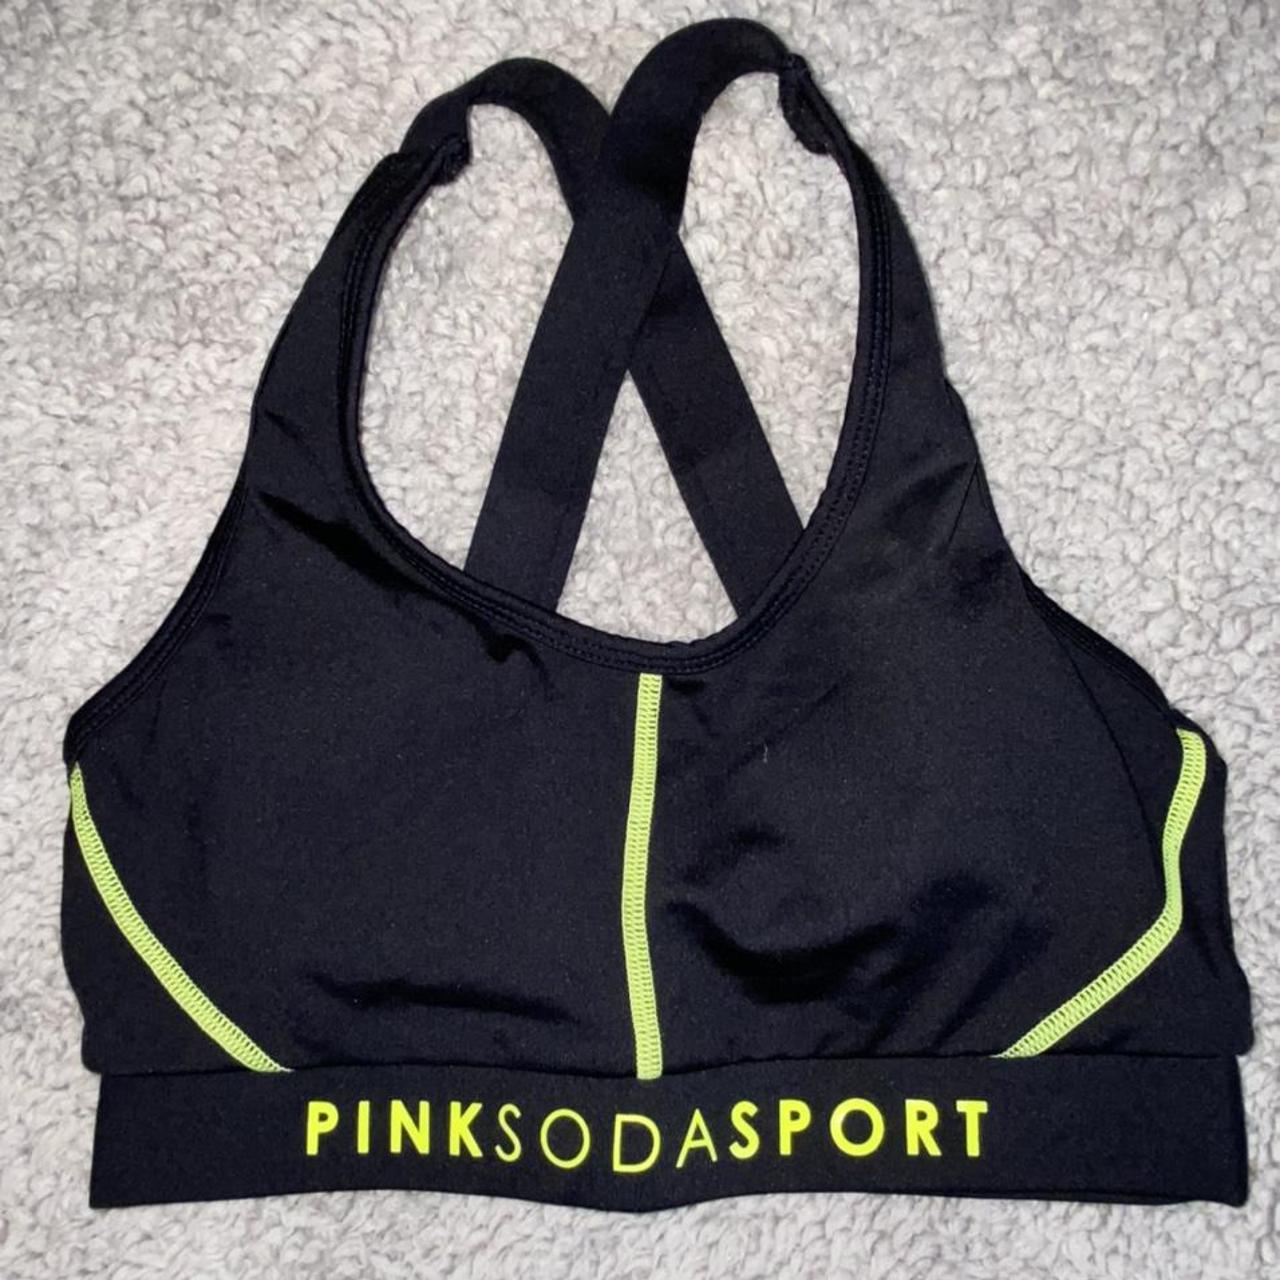 Pink soda sport racer back high impact sports bra. - Depop